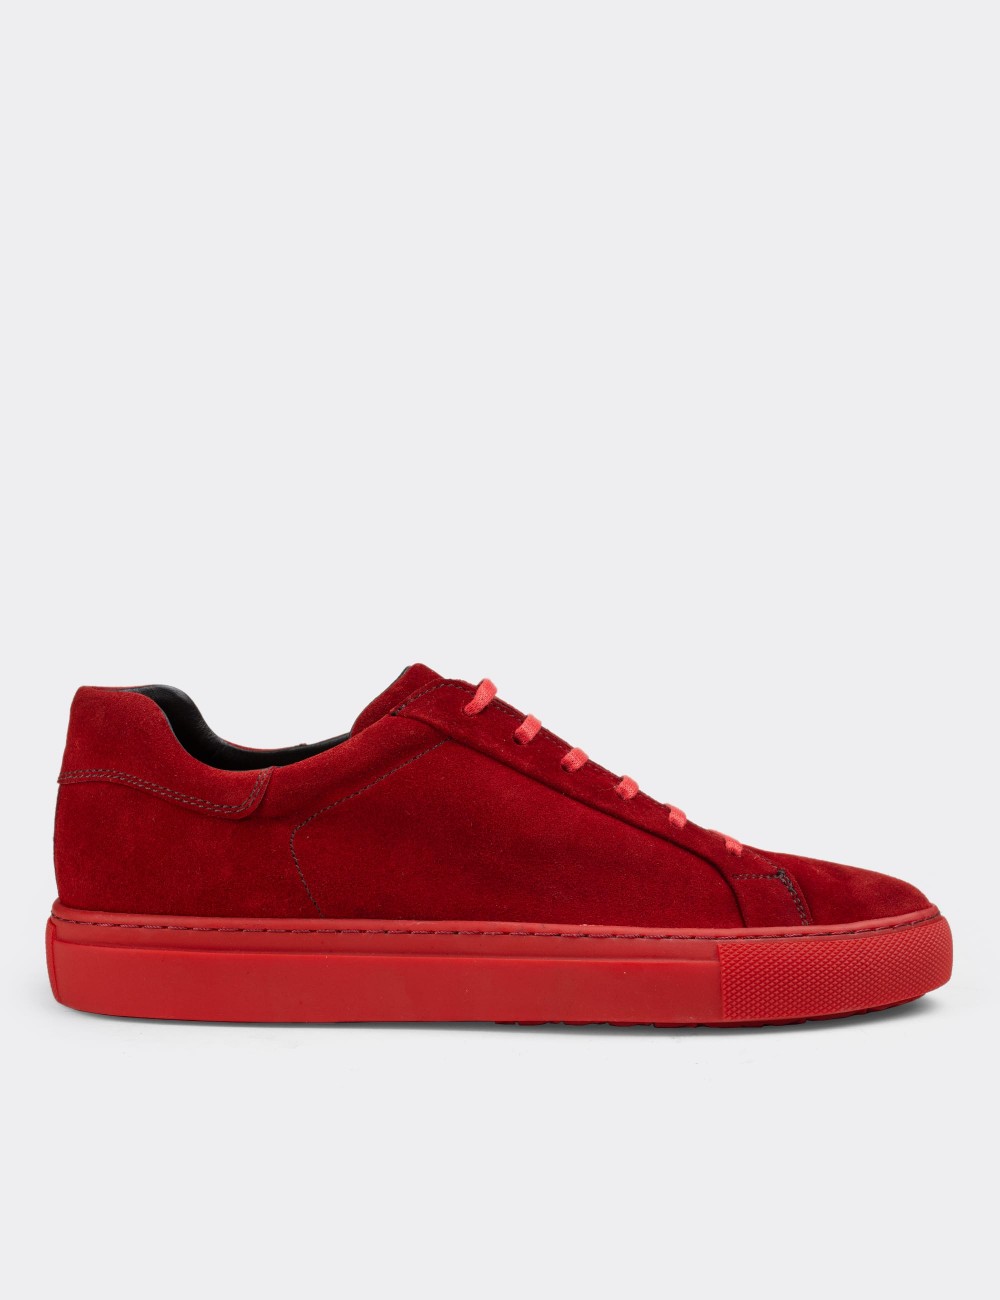 Red Balmain shoes for men | Balmain shoes, Shoes mens, Shoes